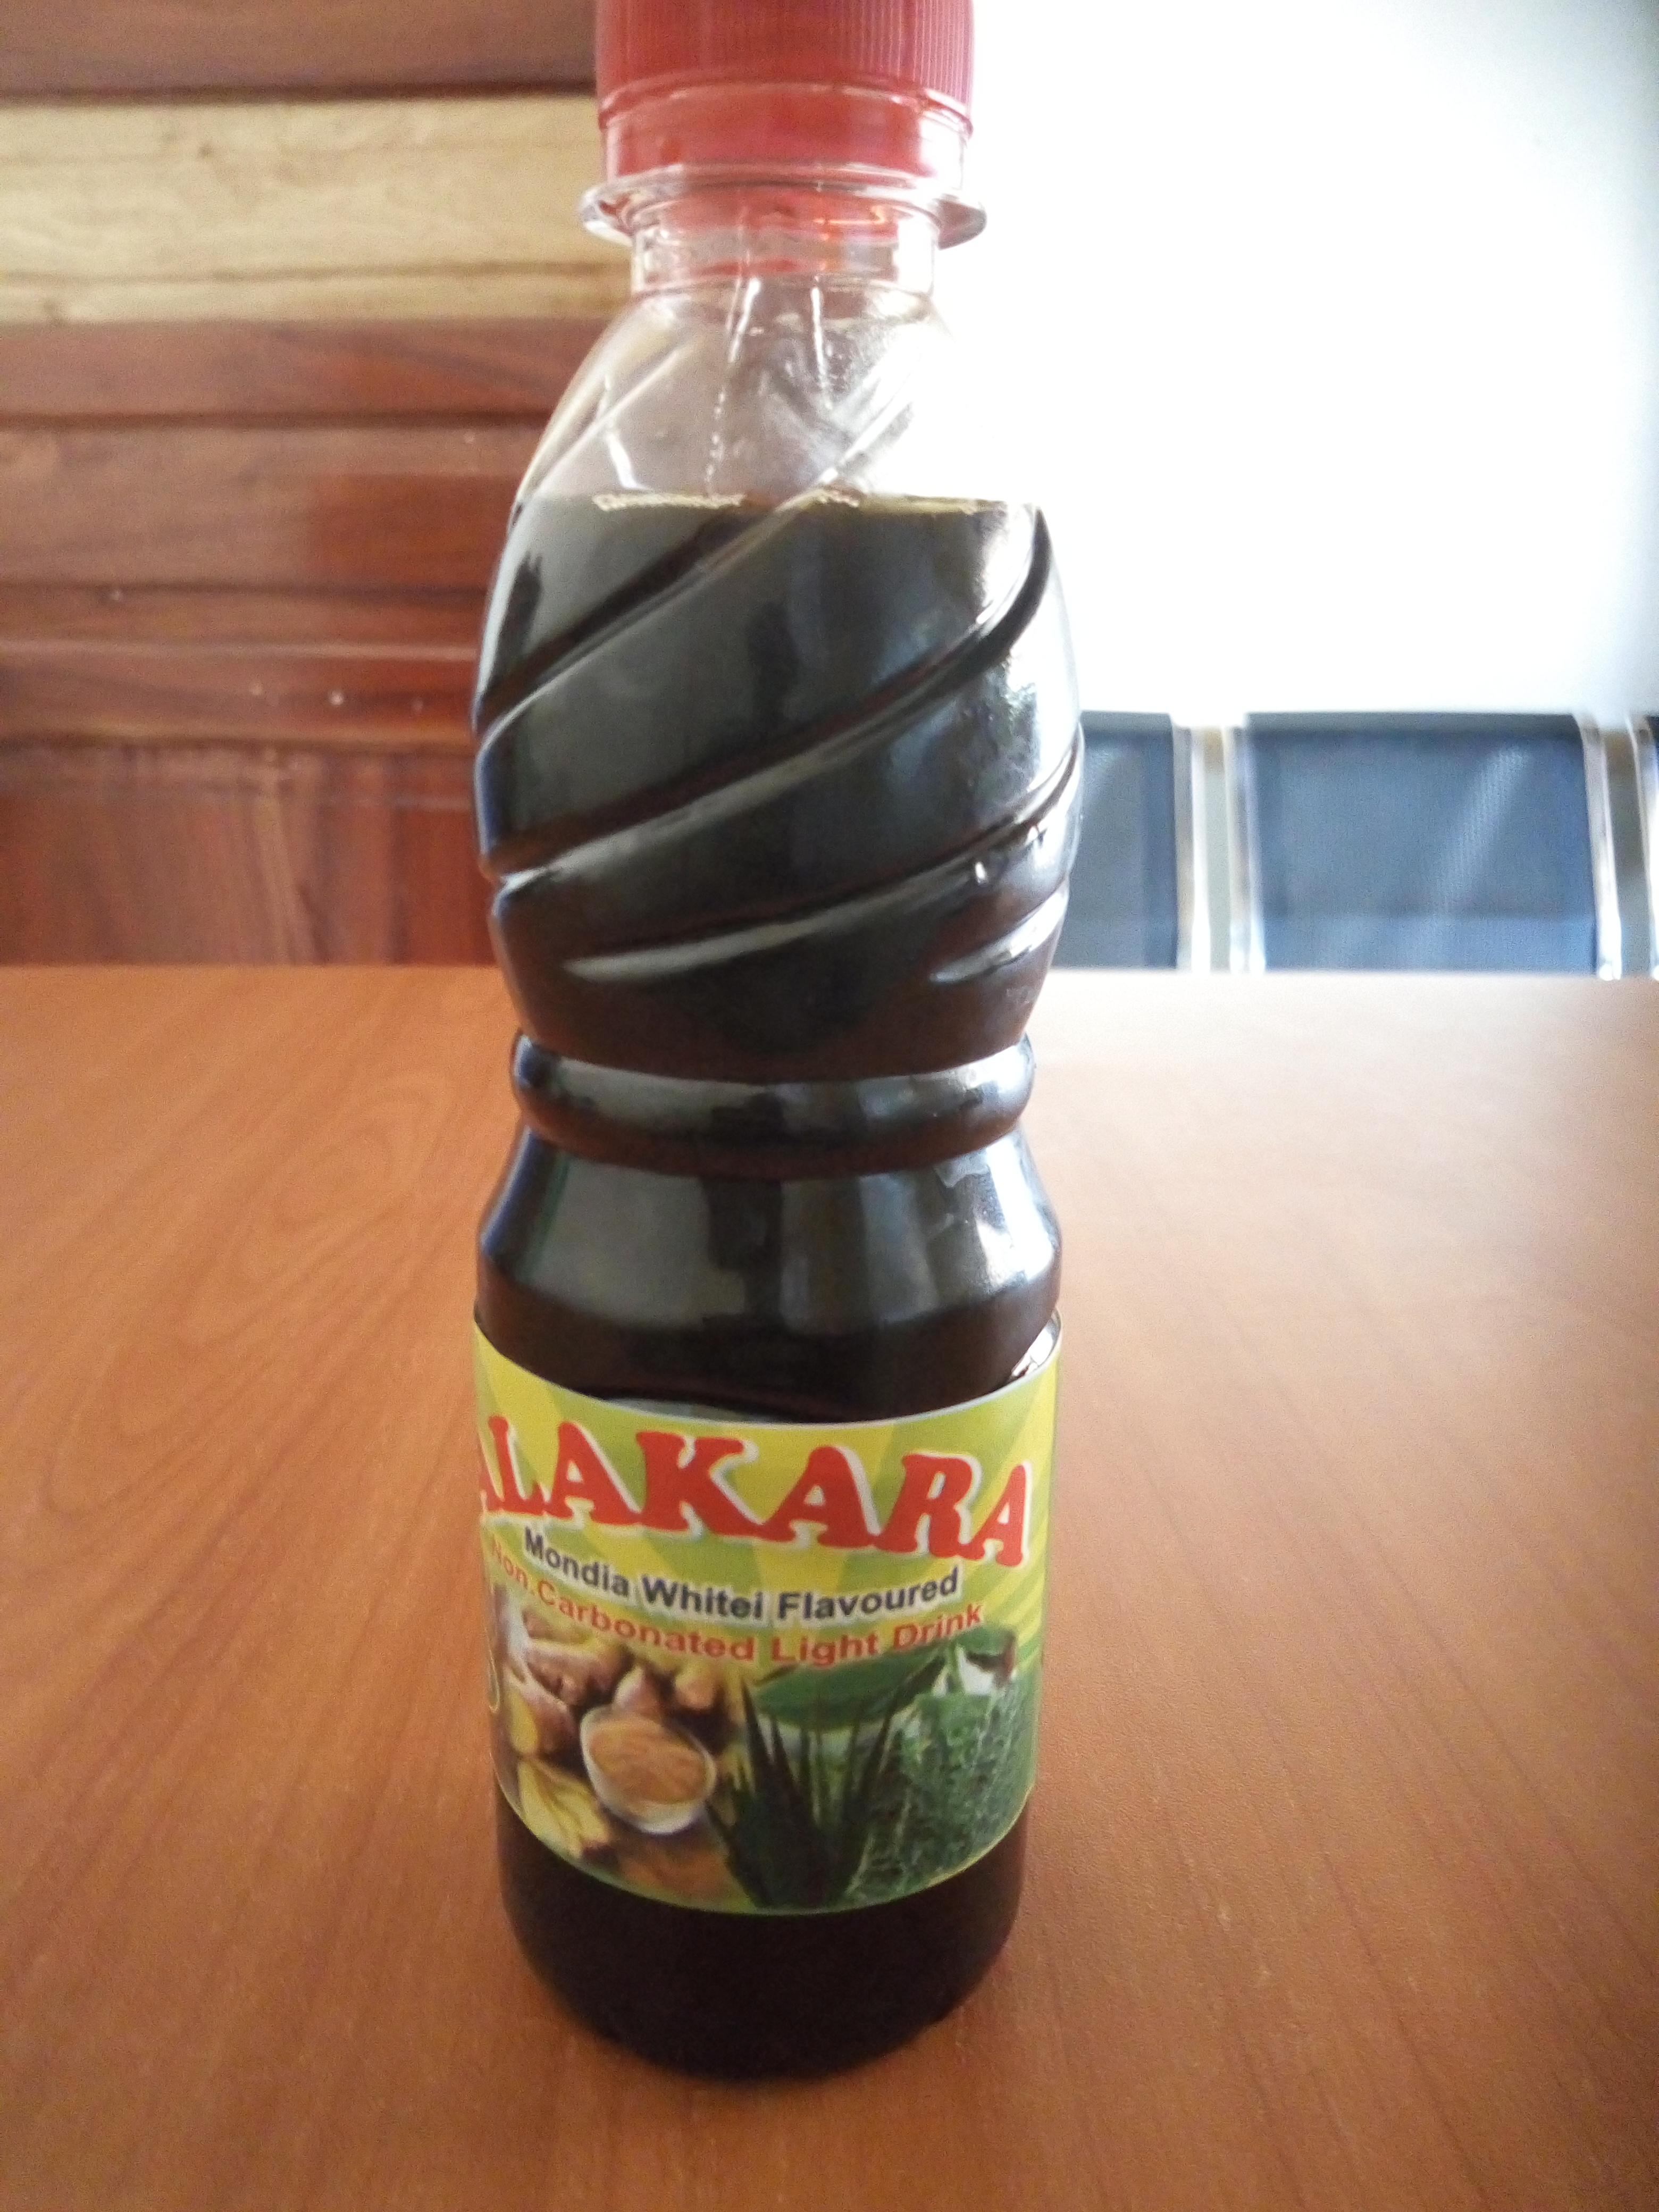 Alakara health drink